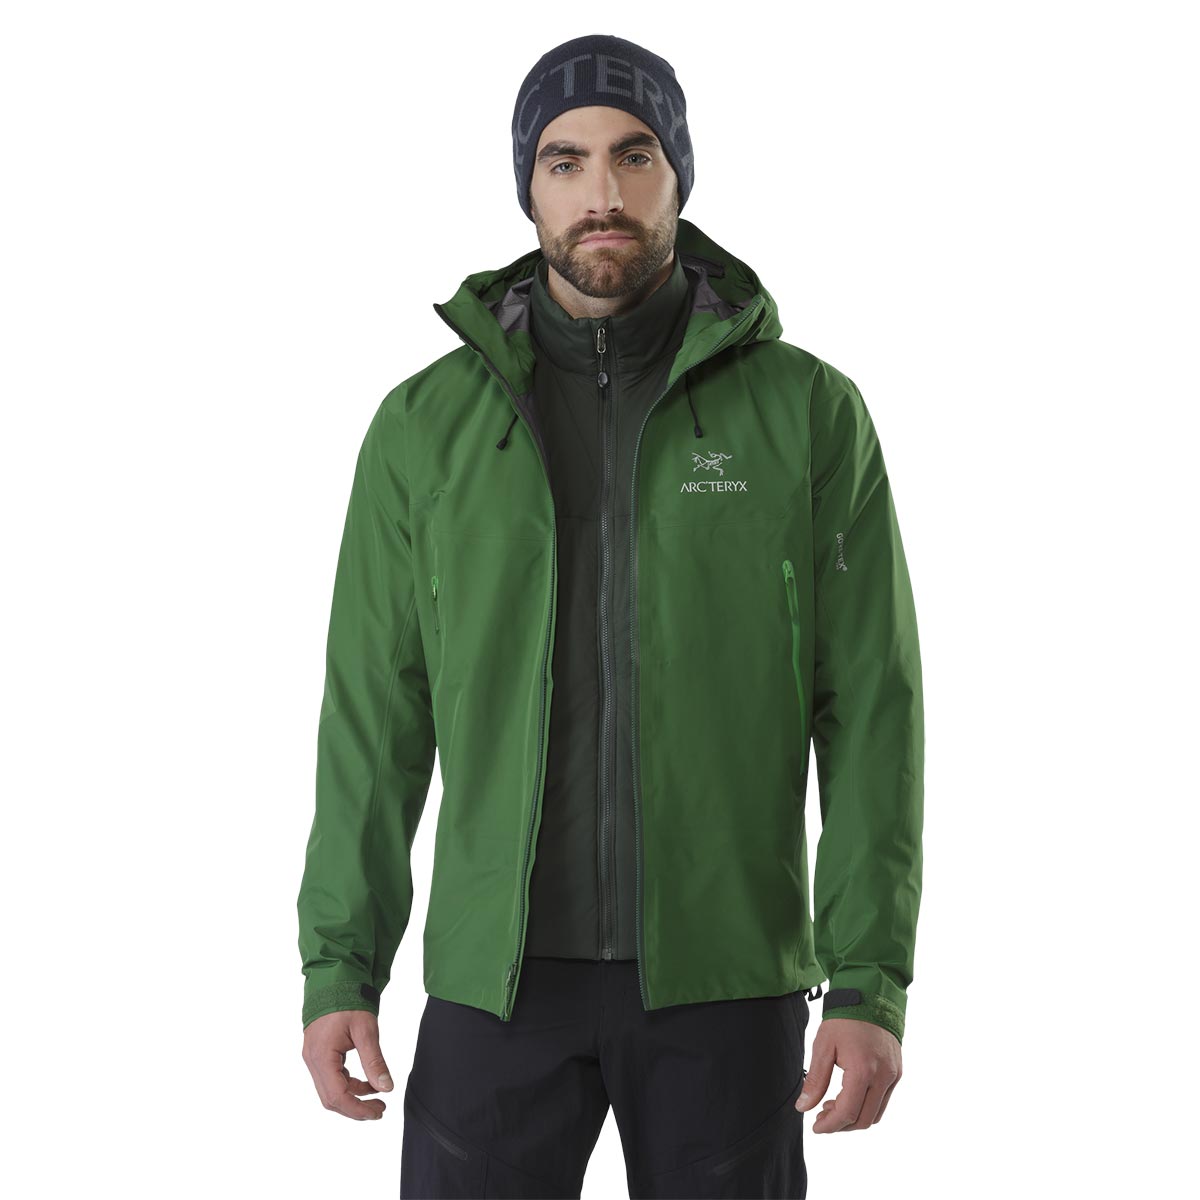 Arc'teryx Atom LT Jacket, men's, discontinued Spring 2019 colors (free